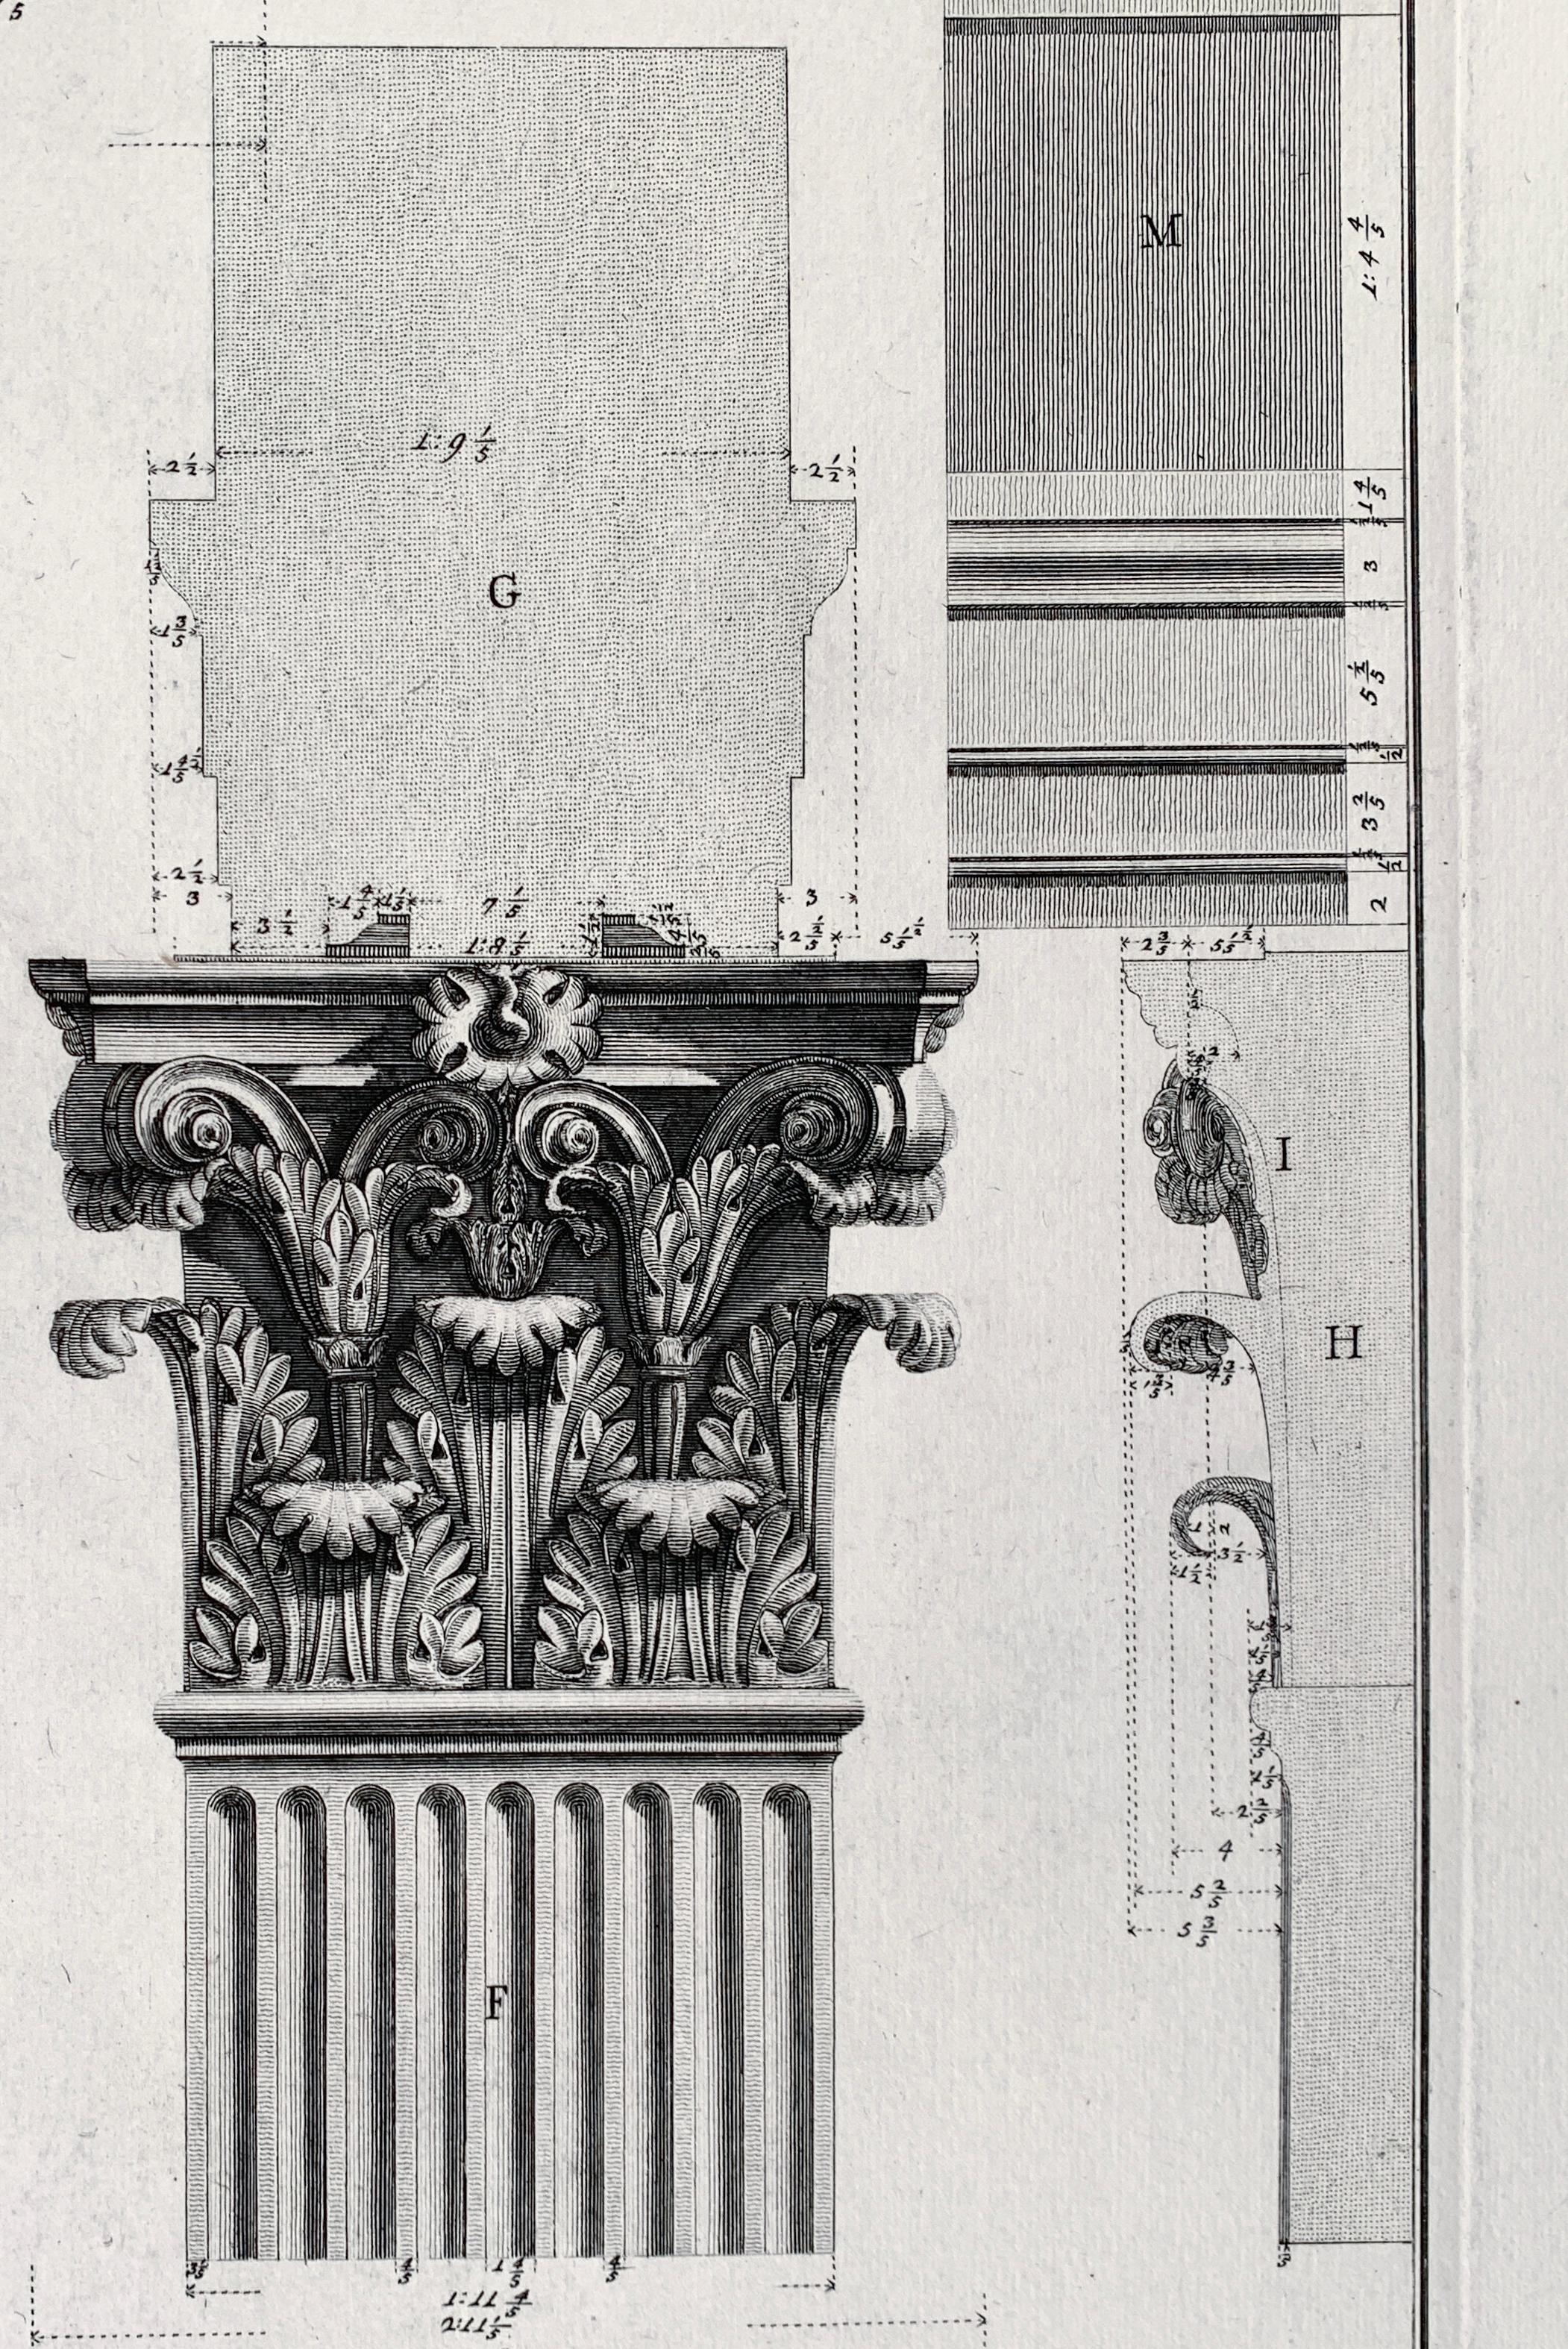 pantheon architectural elements